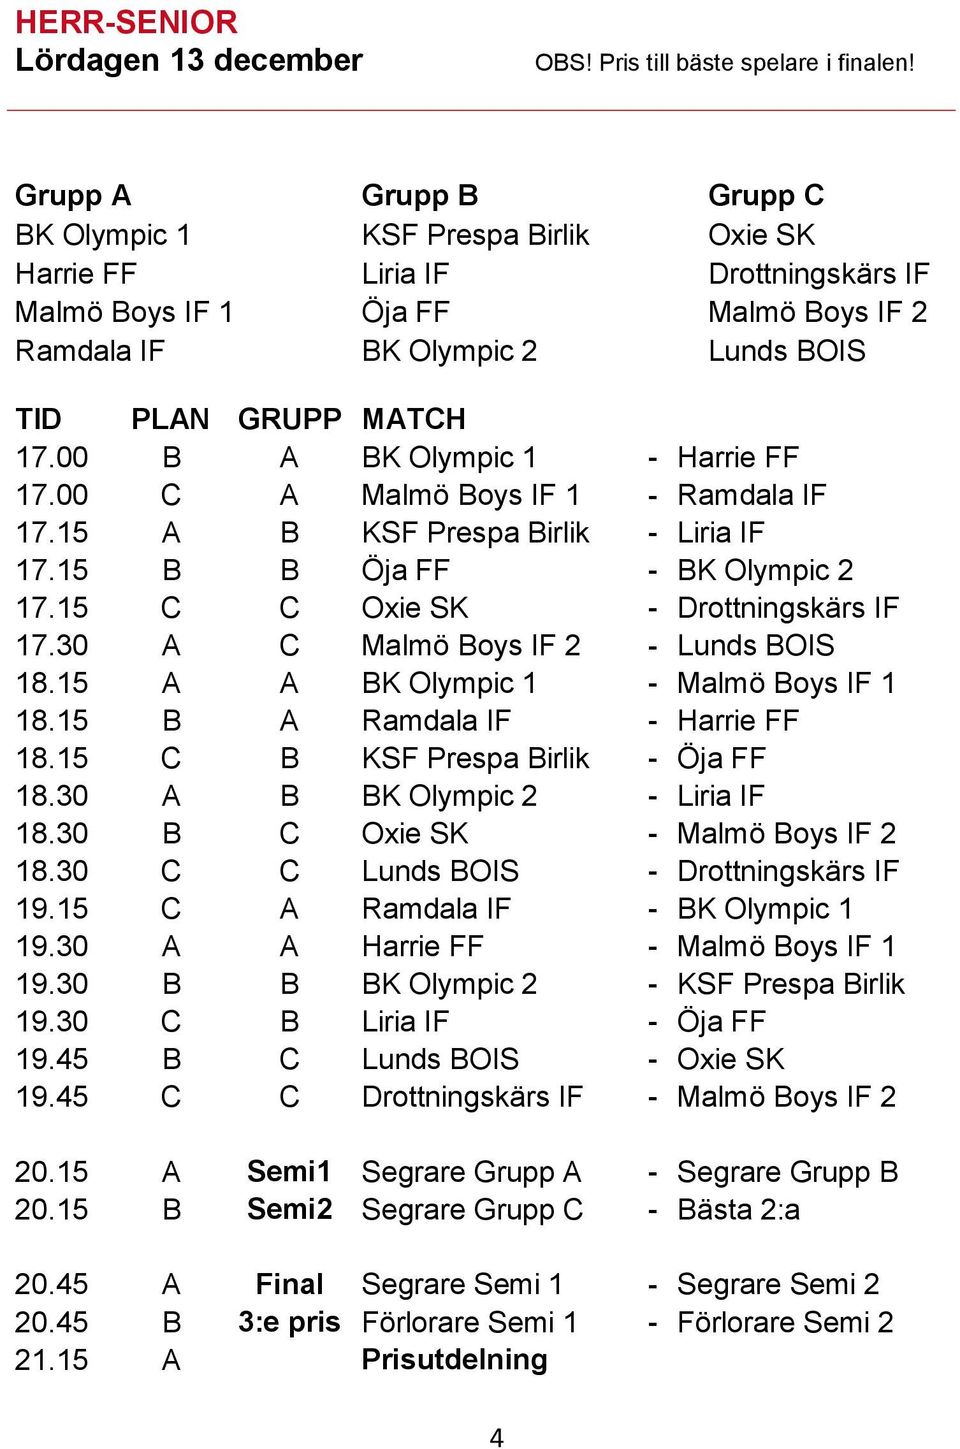 00 B A BK Olympic 1 - Harrie FF 17.00 C A Malmö Boys IF 1 - Ramdala IF 17.15 A B KSF Prespa Birlik - Liria IF 17.15 B B Öja FF - BK Olympic 2 17.15 C C Oxie SK - Drottningskärs IF 17.